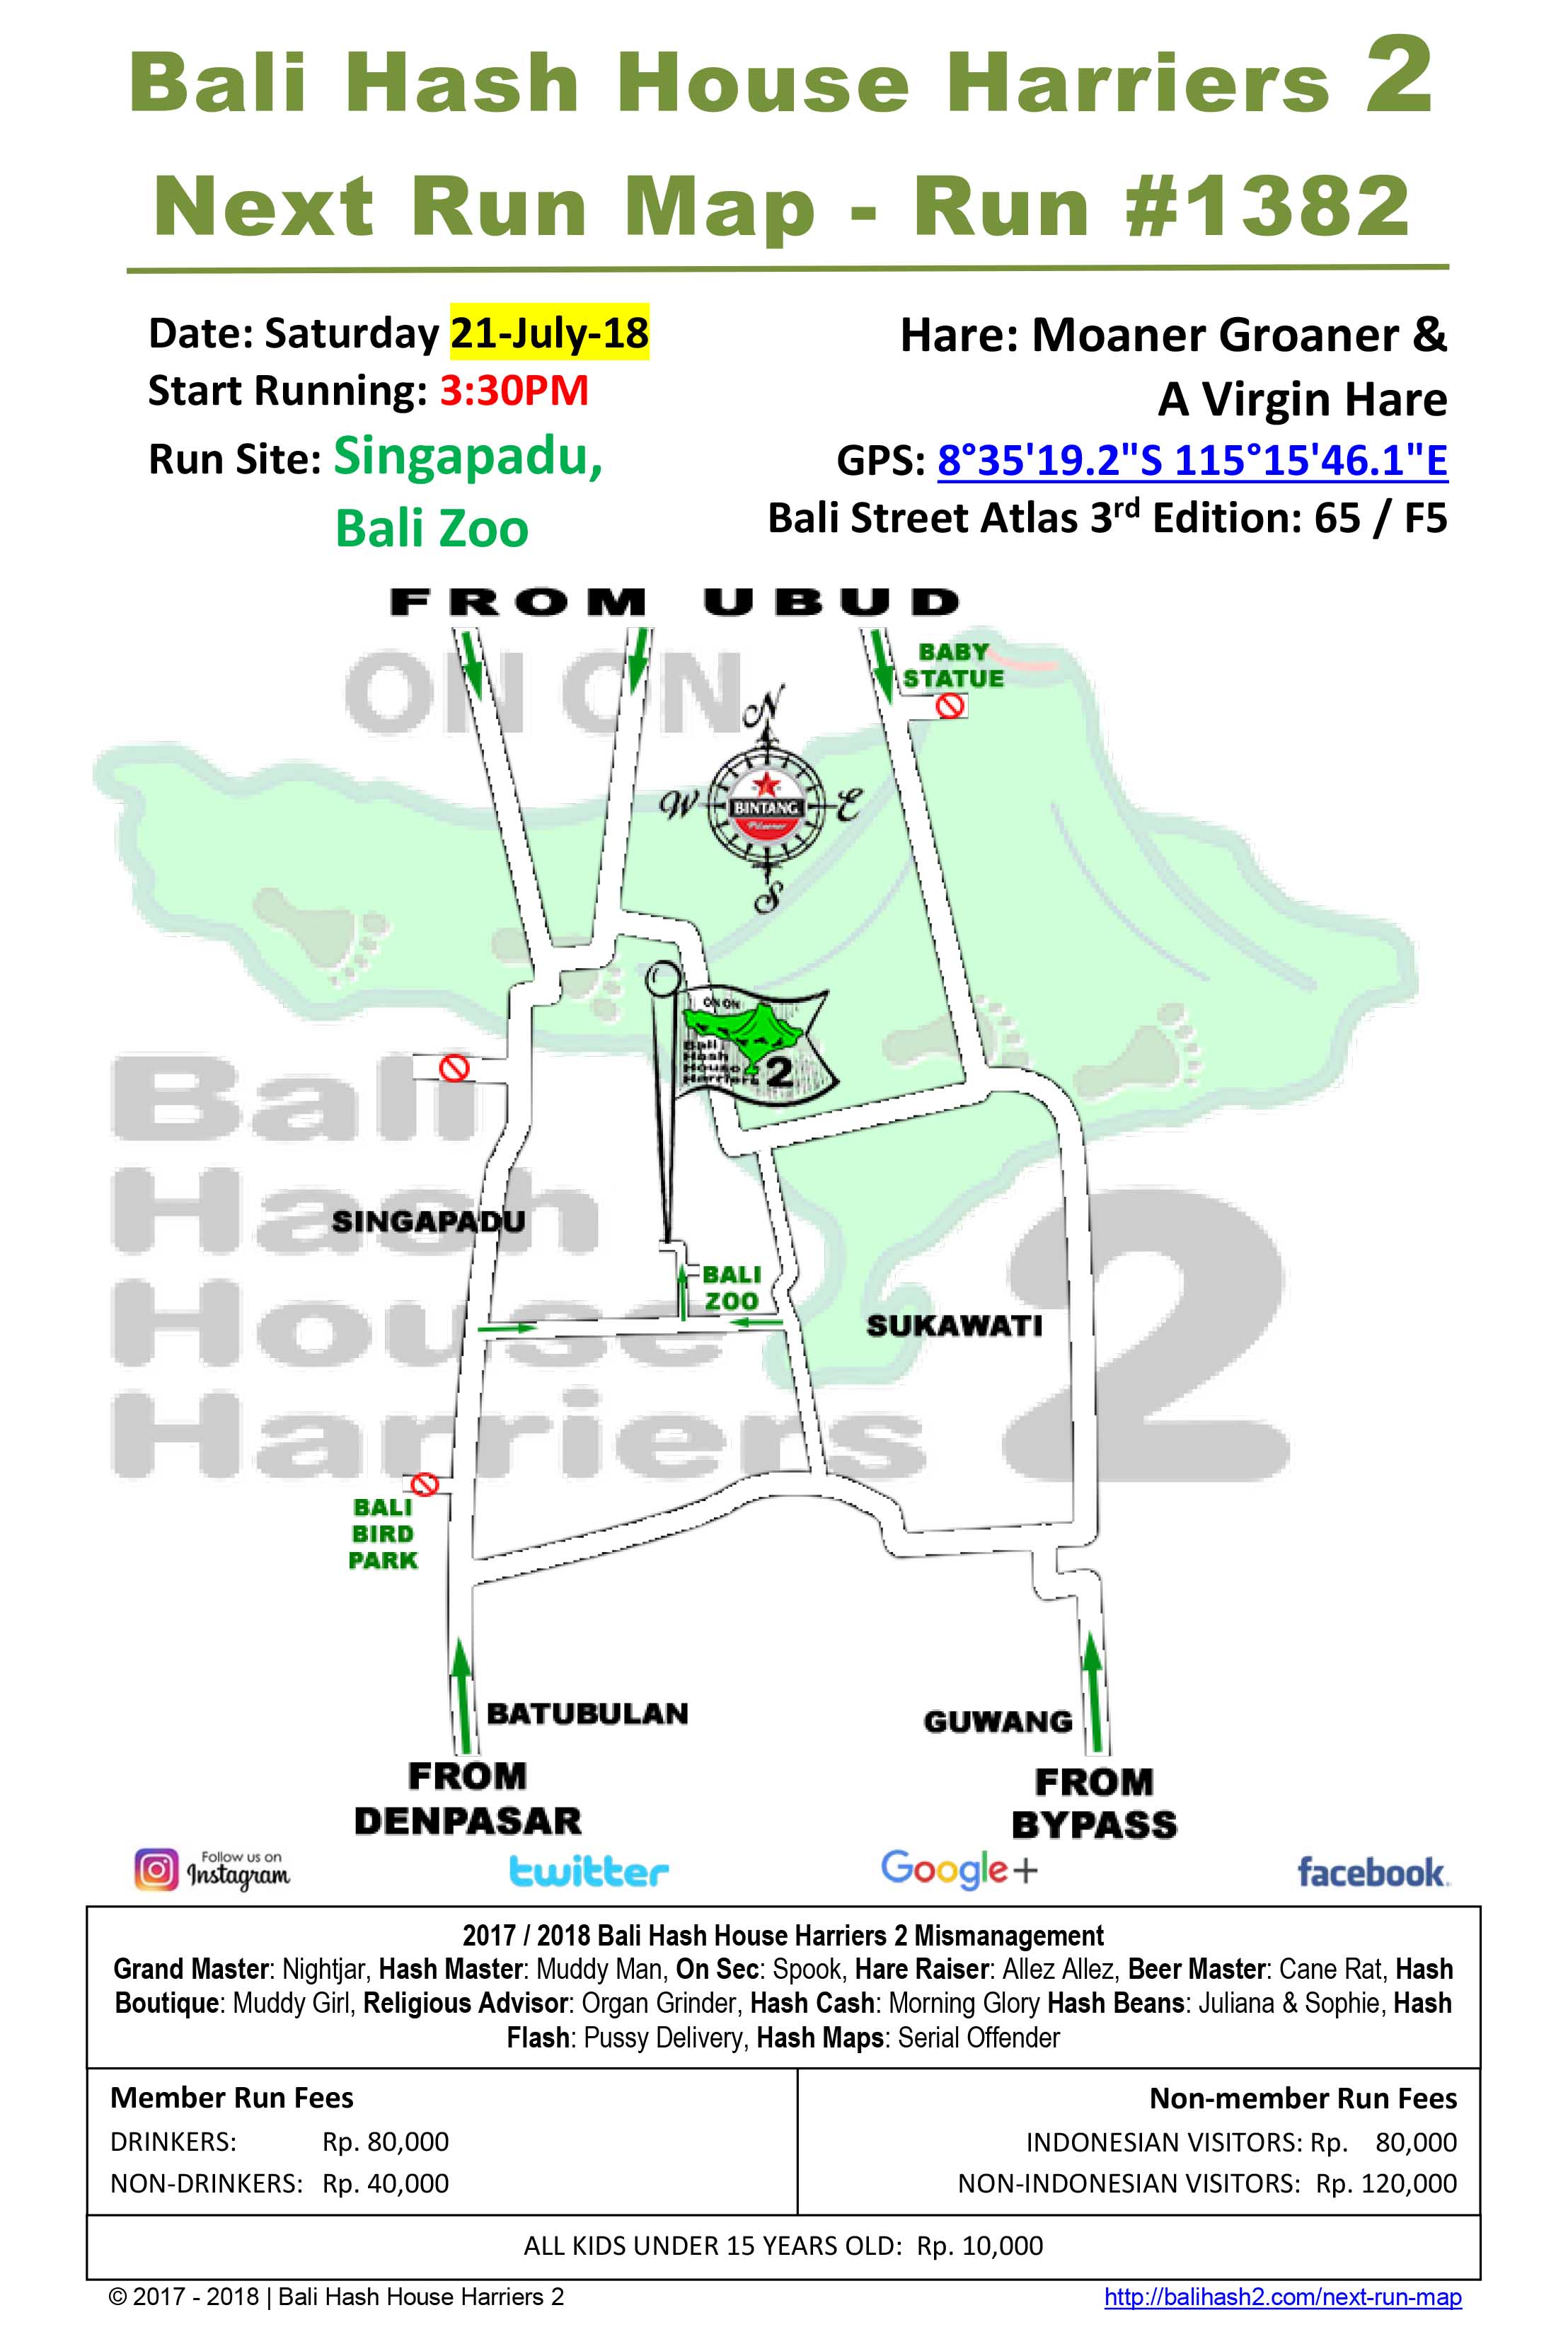 Bali Hash House Harriers 2 Next Run Map #1382 Singapadu Bali Zoo 21-Jul-18